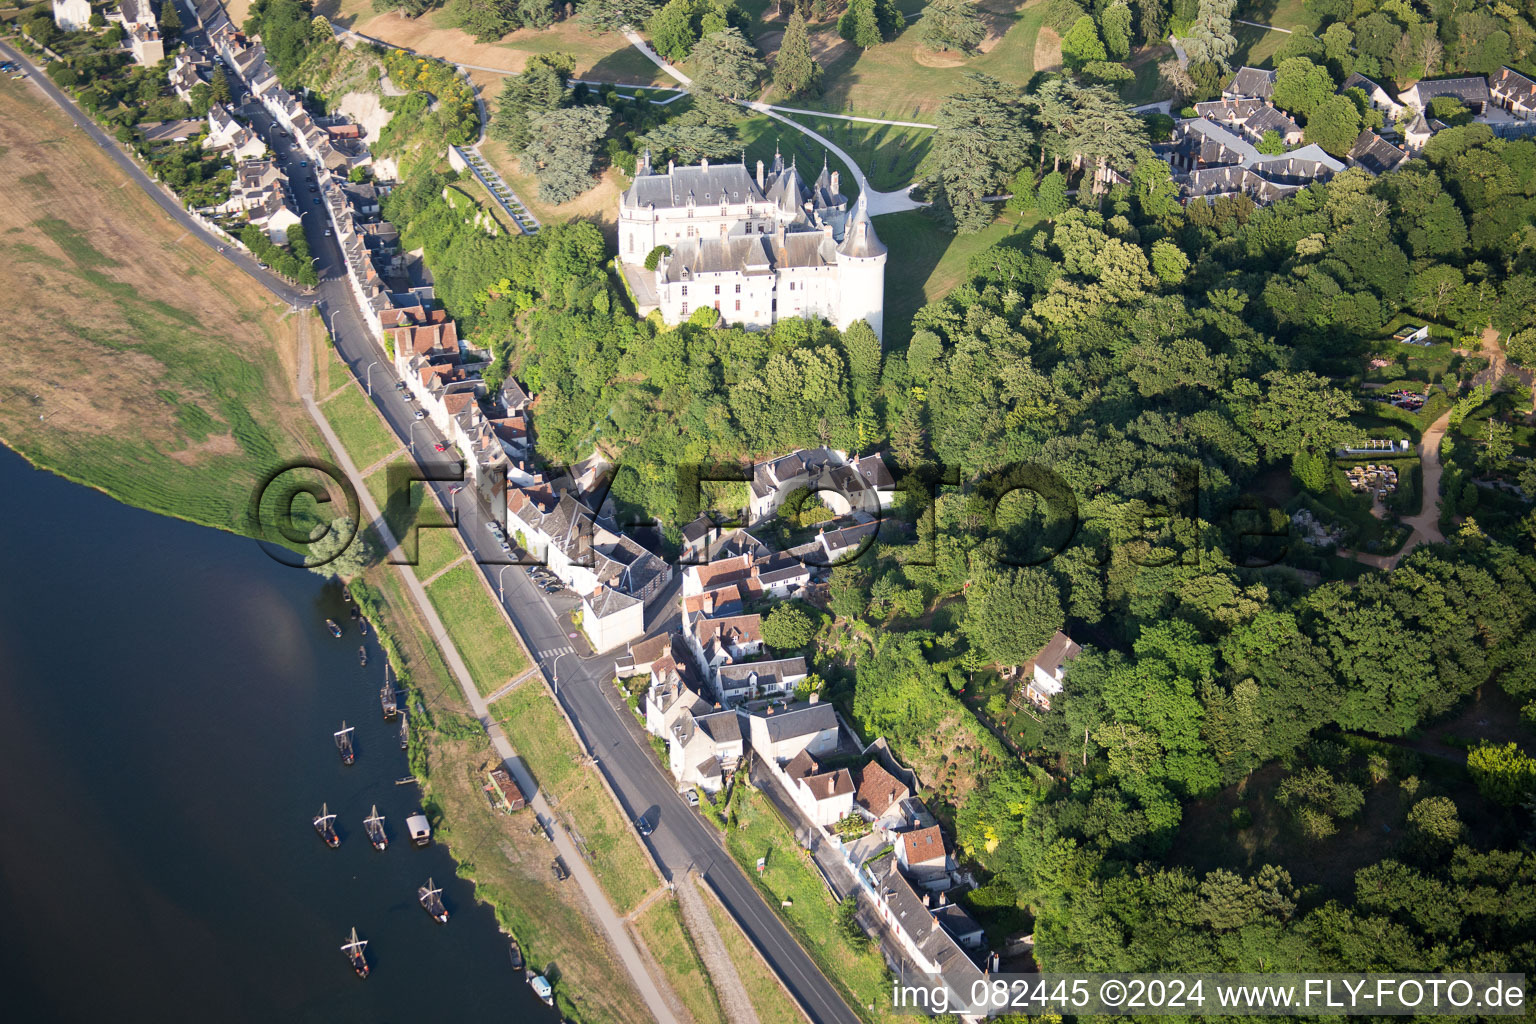 Castle of Schloss Chaumont in Chaumont-sur-Loire in Centre-Val de Loire, France from above